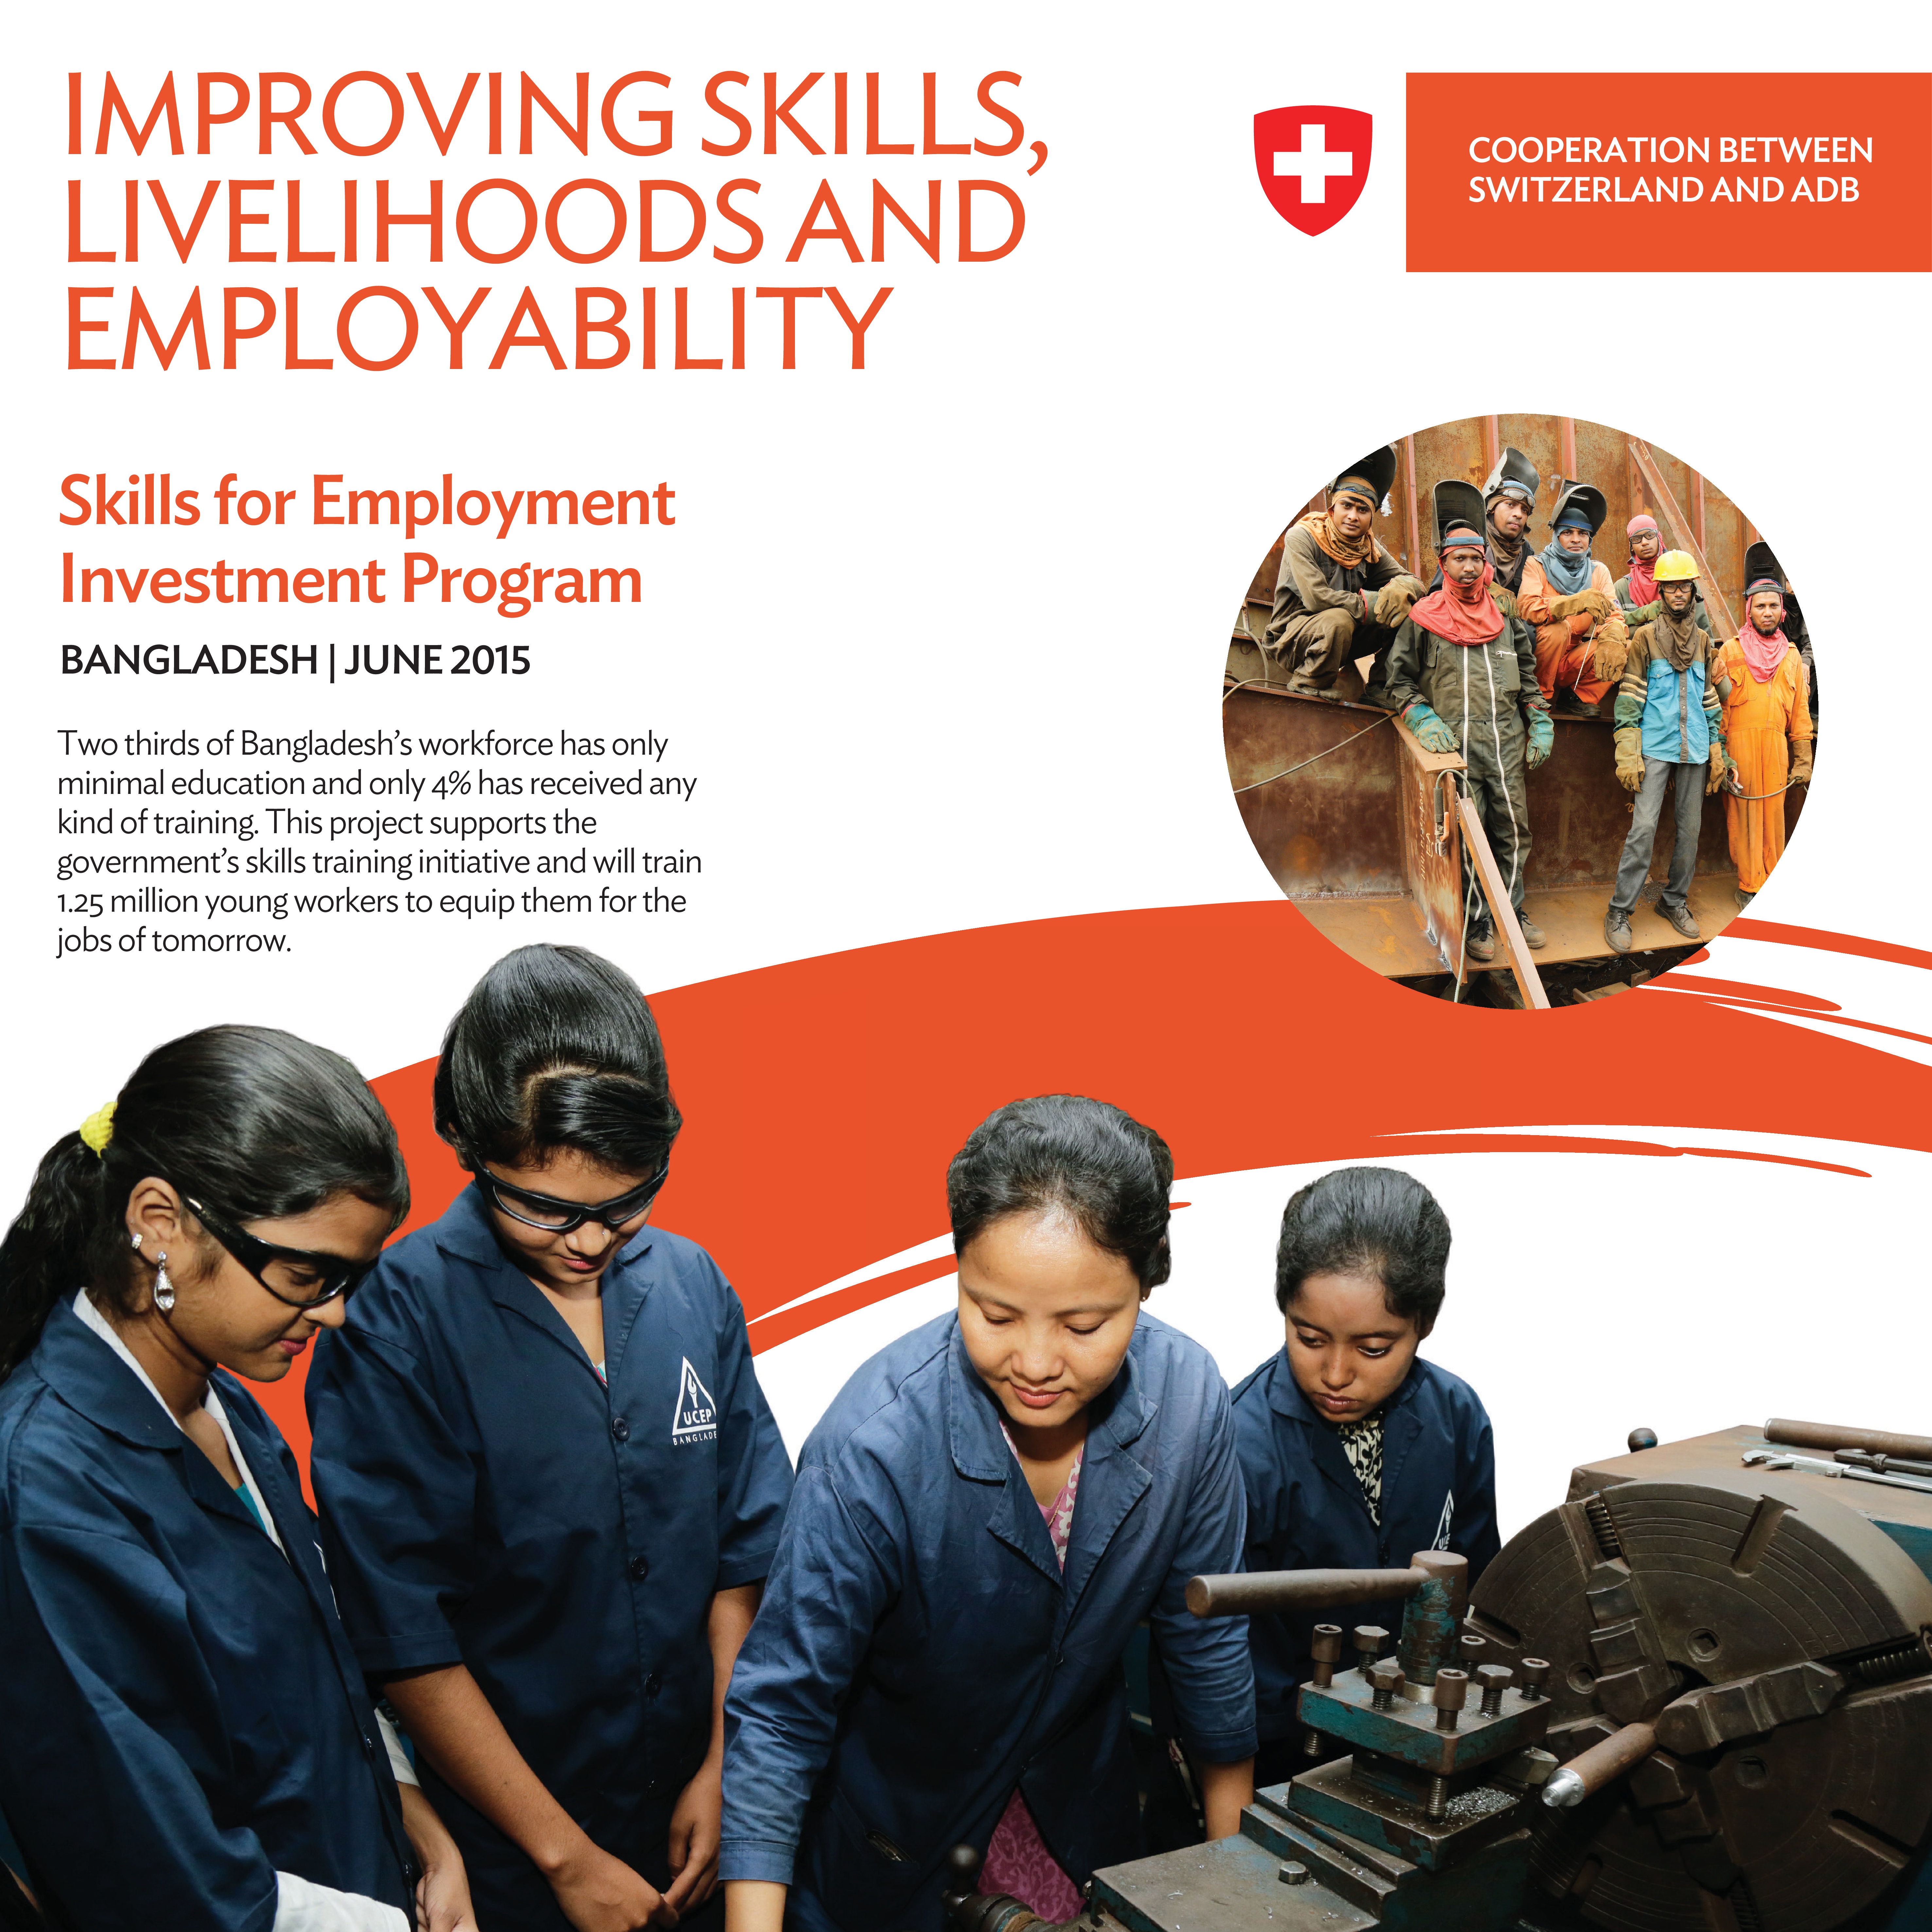 Skills for Employment Investment Program, Bangladesh, June 2015